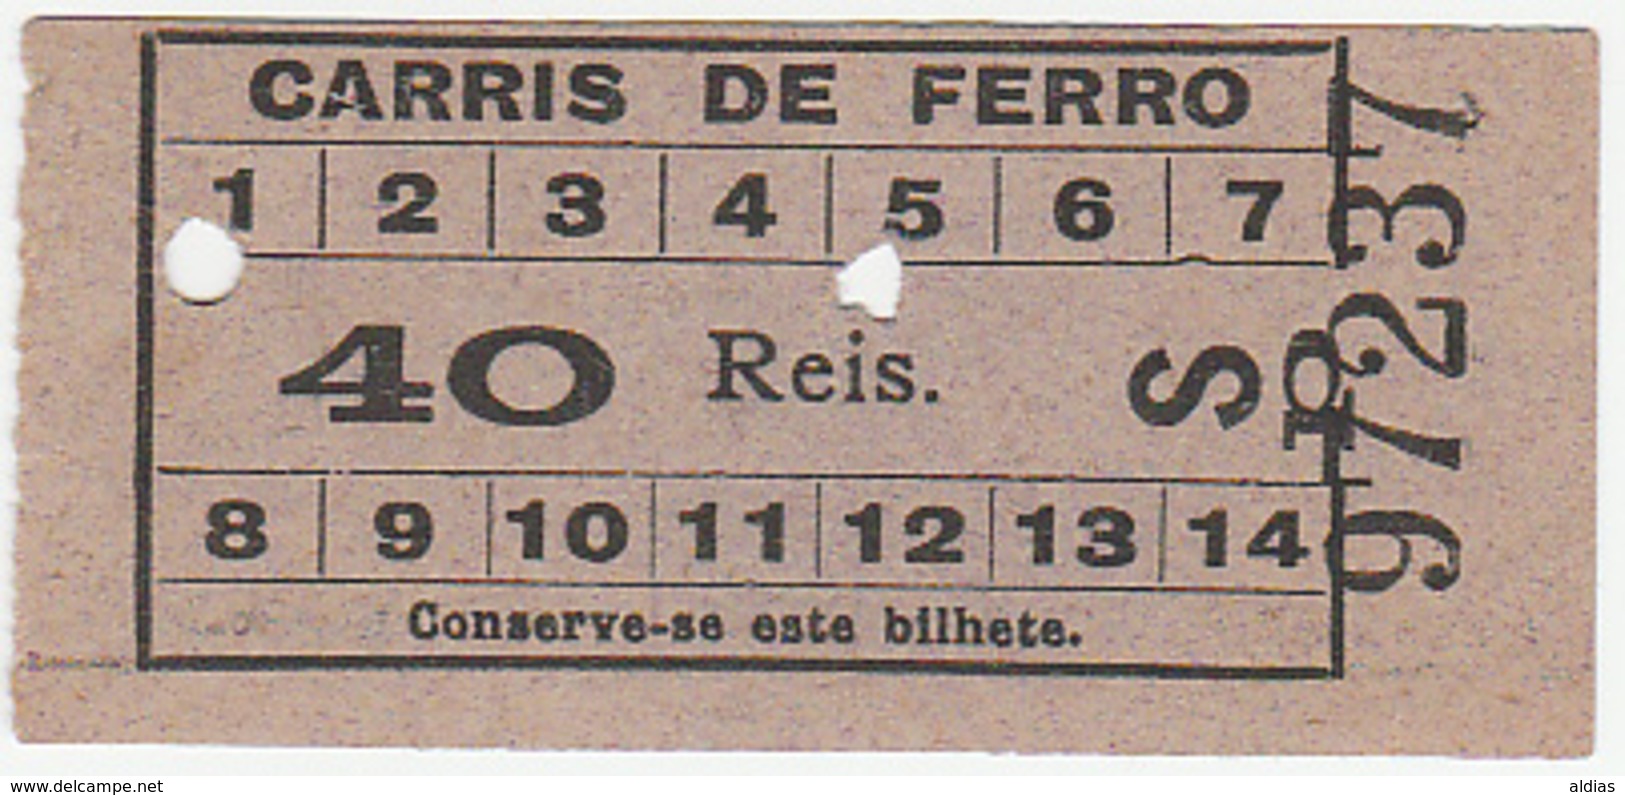 Portugal  Carris De Ferro Lisboa Tram  Ticket 40 Reis Bilhete (crc 1900) - Europe